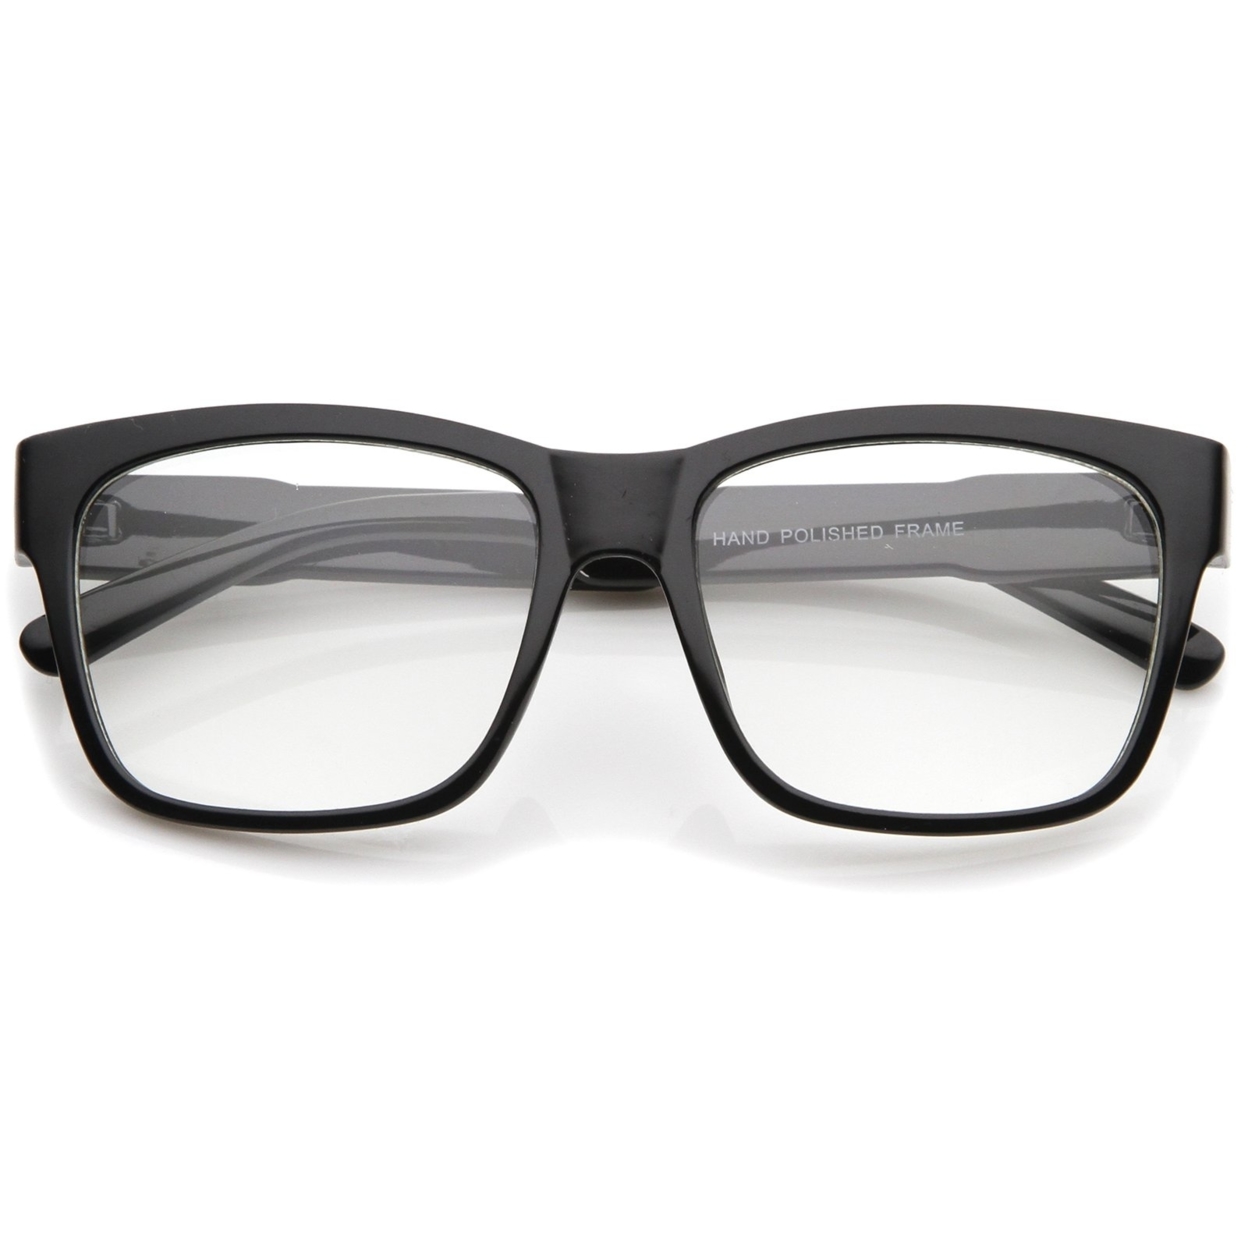 Casual Bold Square Clear Lens Horn Rimmed Eyeglasses 53mm - Matte Tortoise / Clear